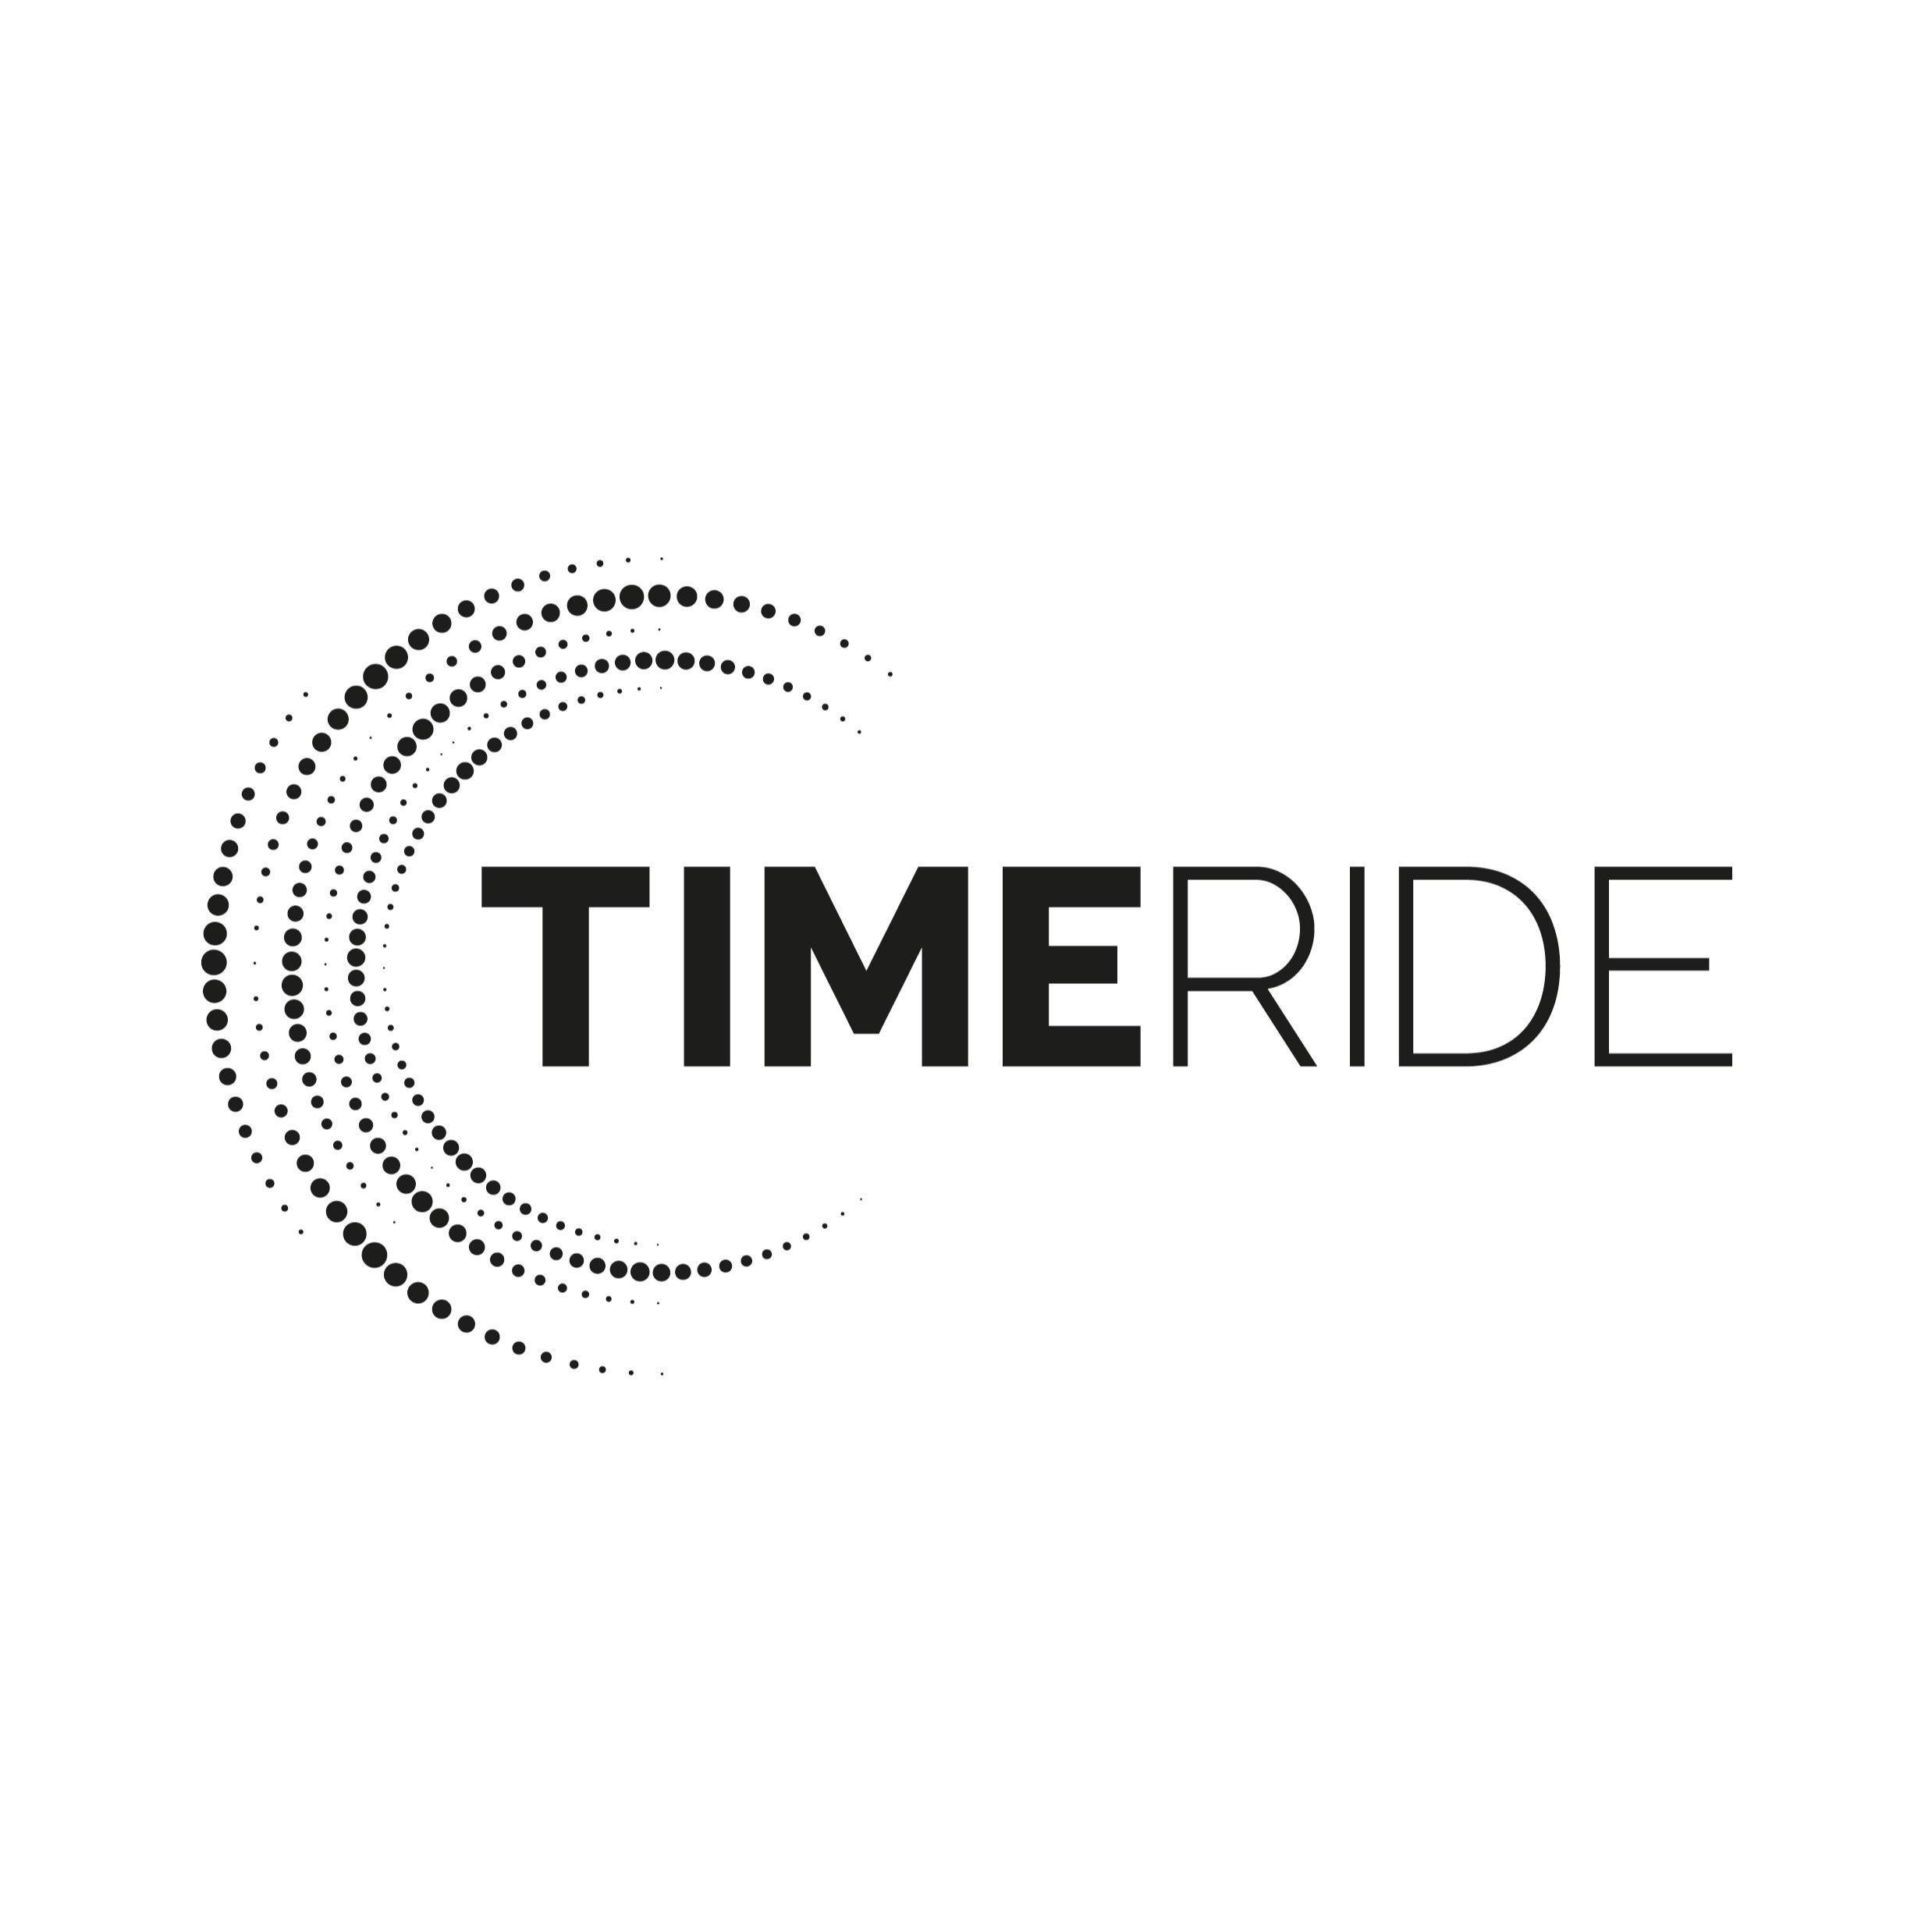 TimeRide Kloster Andechs Logo